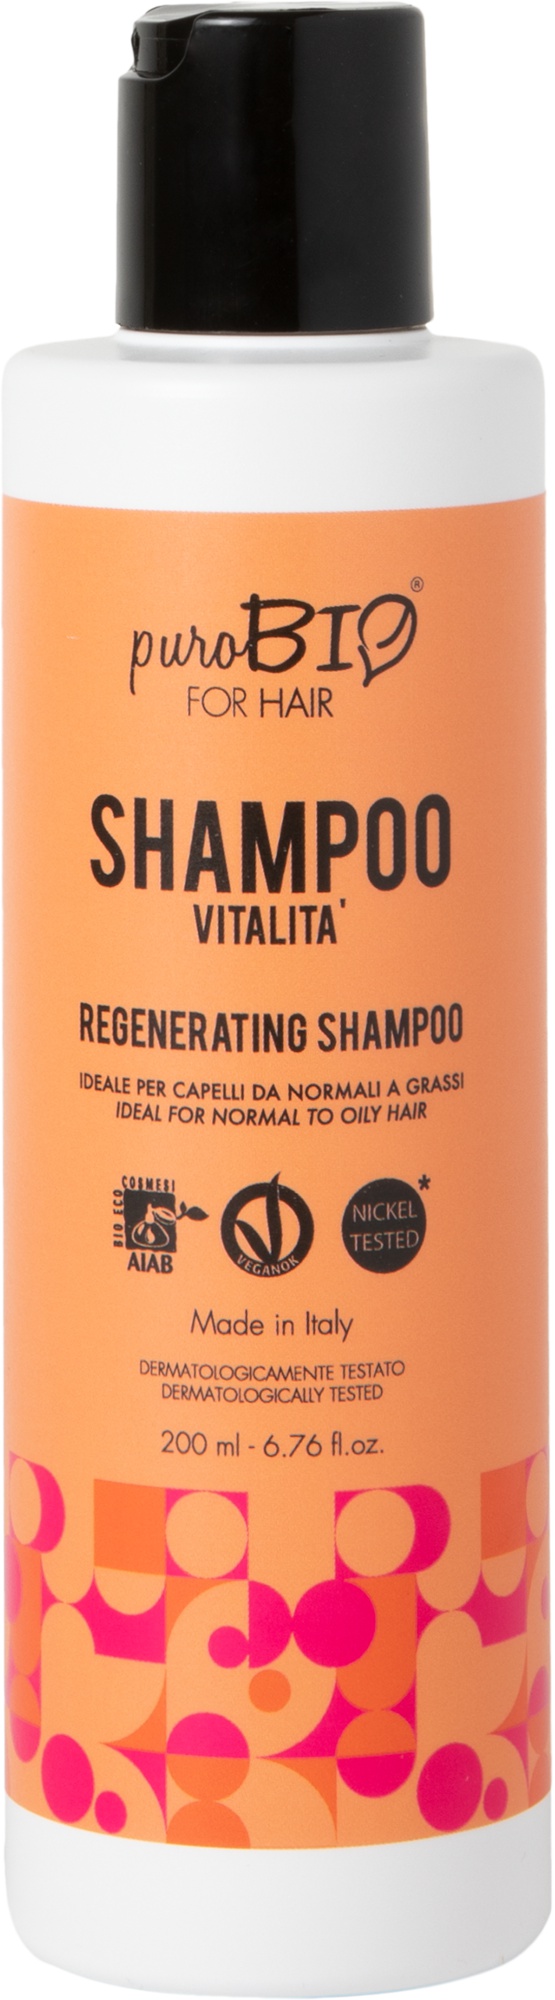 PuroBIO Vitality Regenerating Shampoo